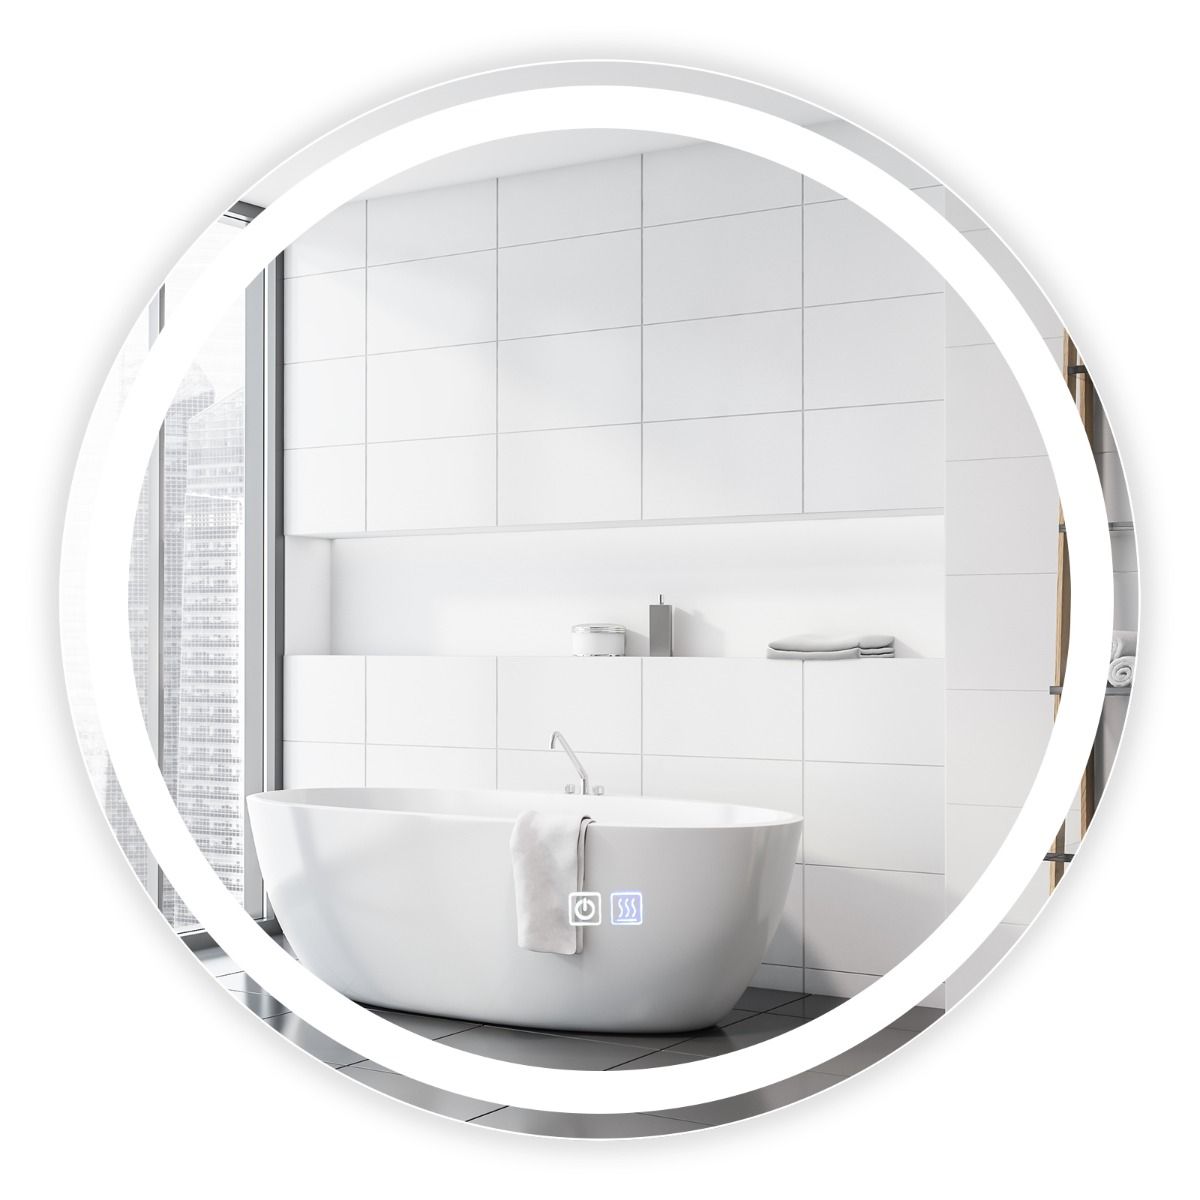 LED Illuminated Wall Mounted Bathroom Mirror with Demister Pad